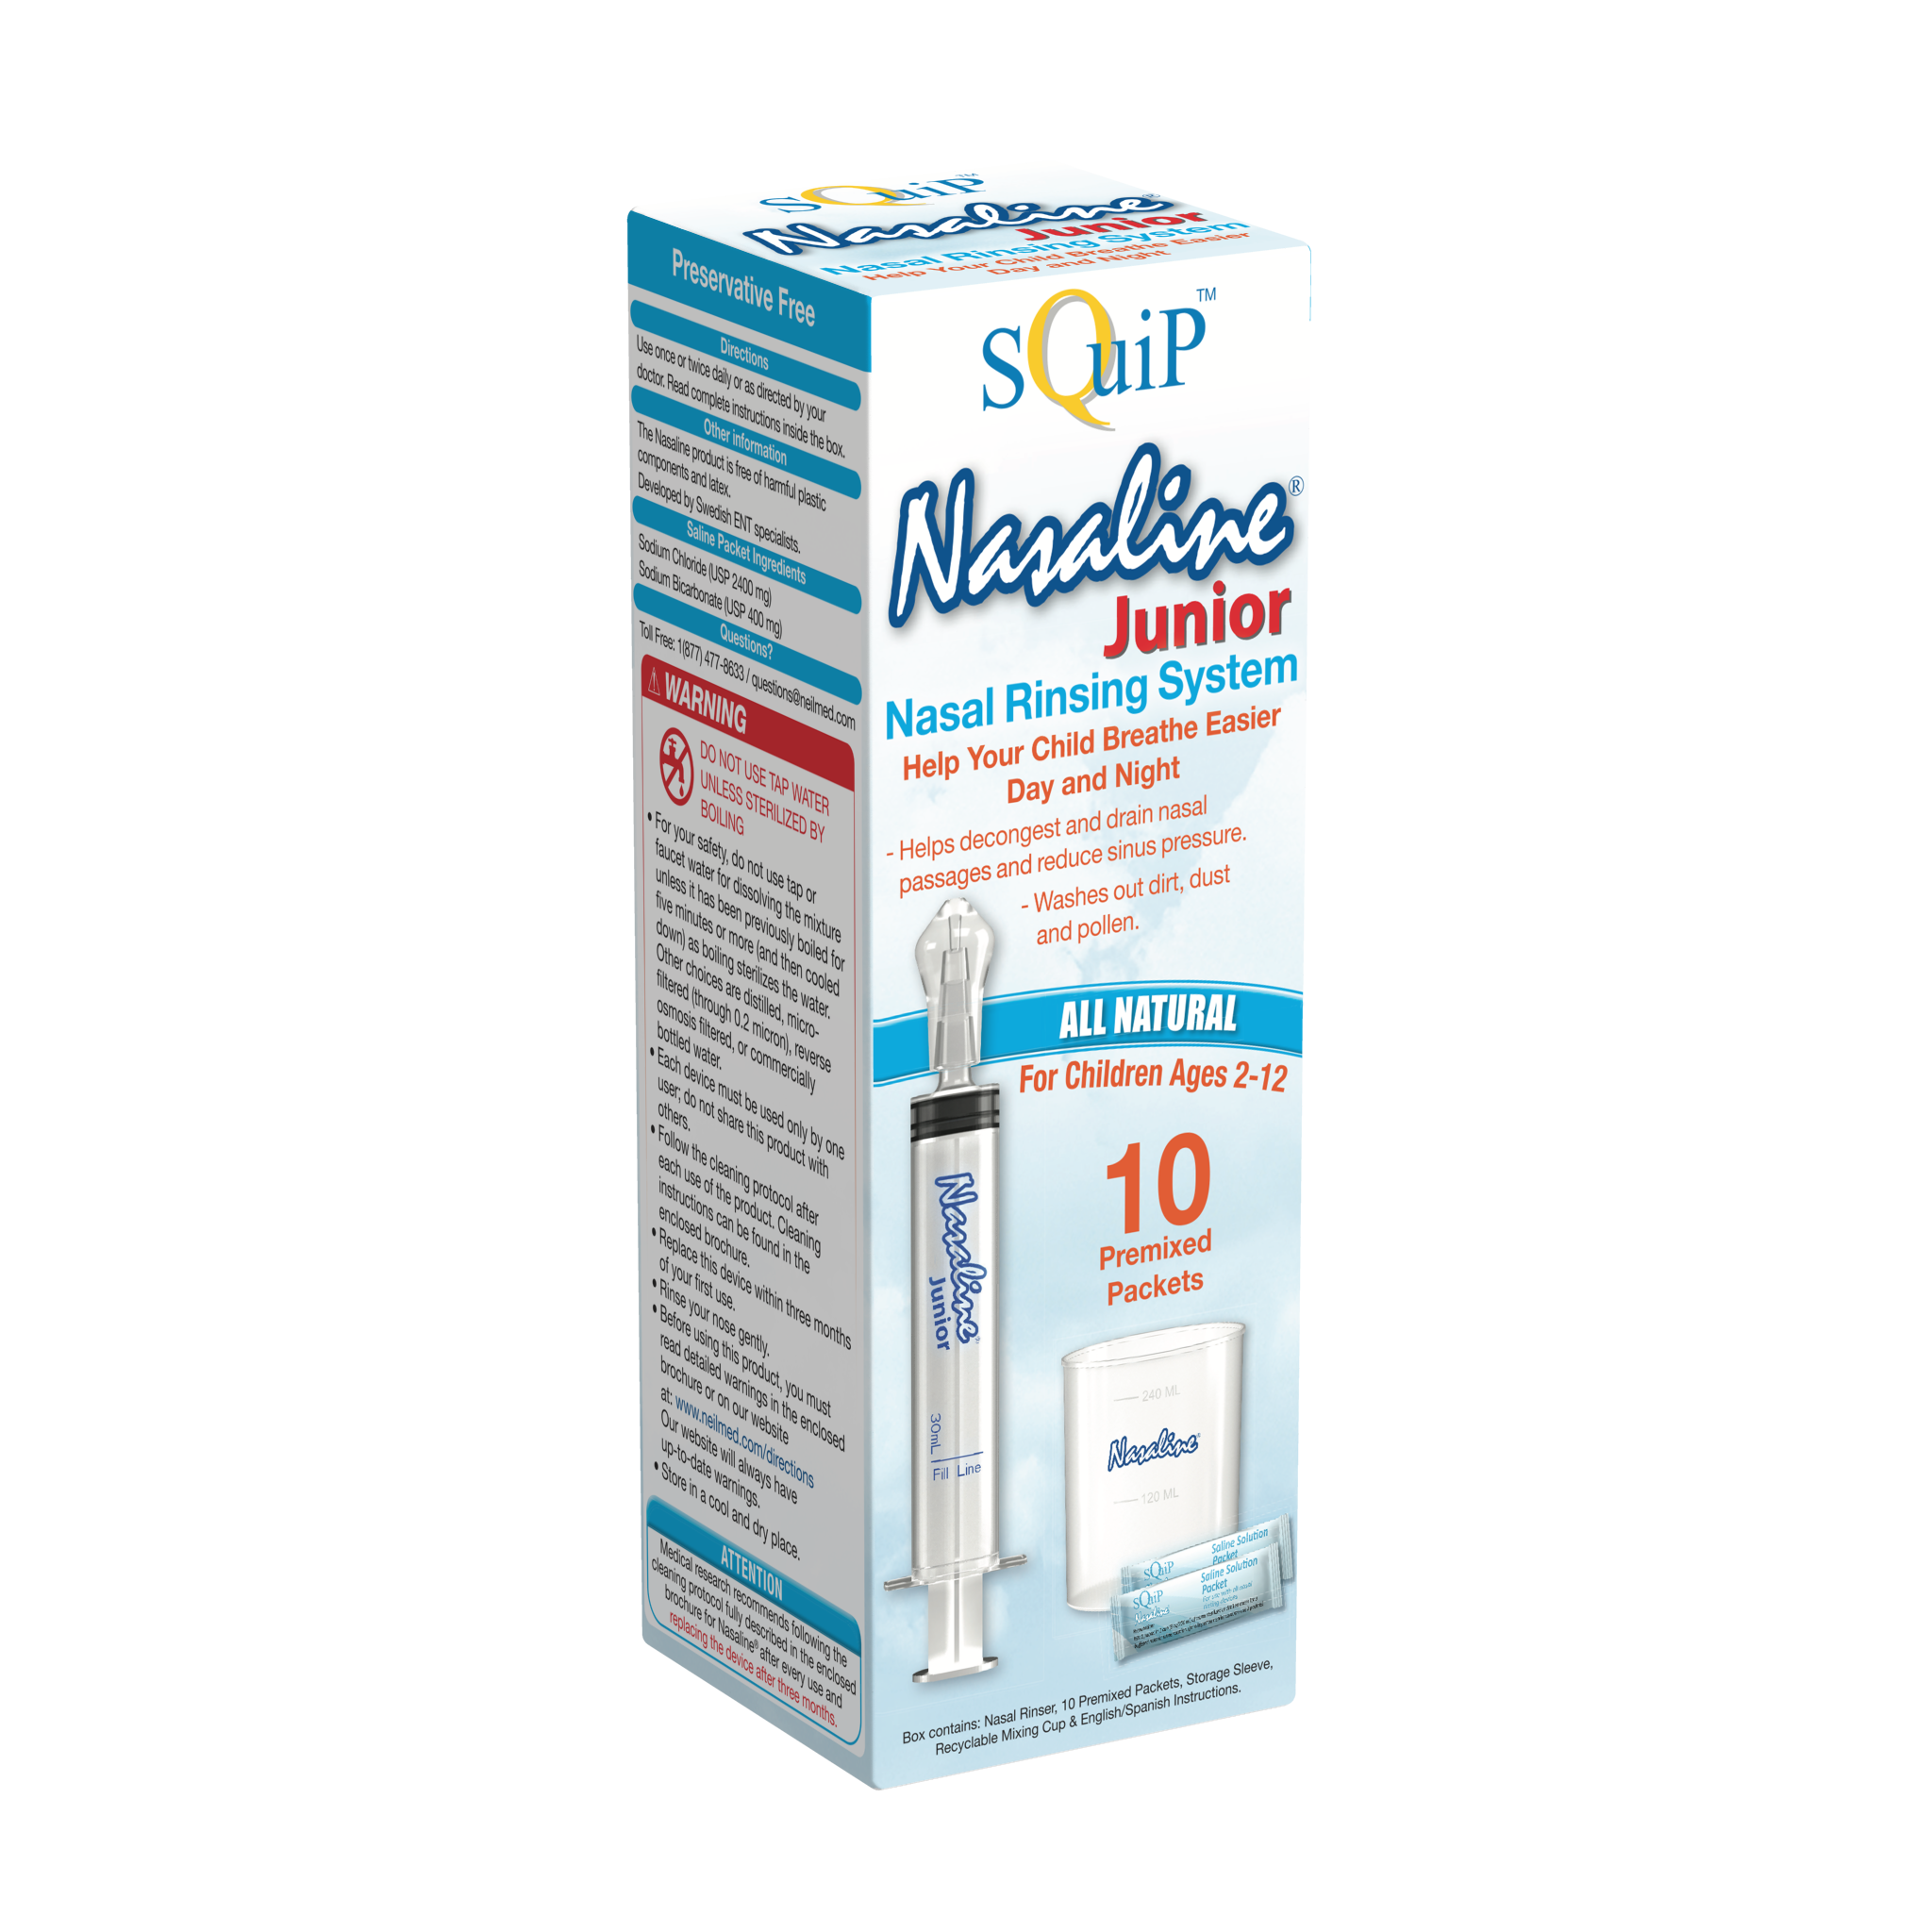 Rhinicur Nasal Rinsing Salt for sale in online pharmacy